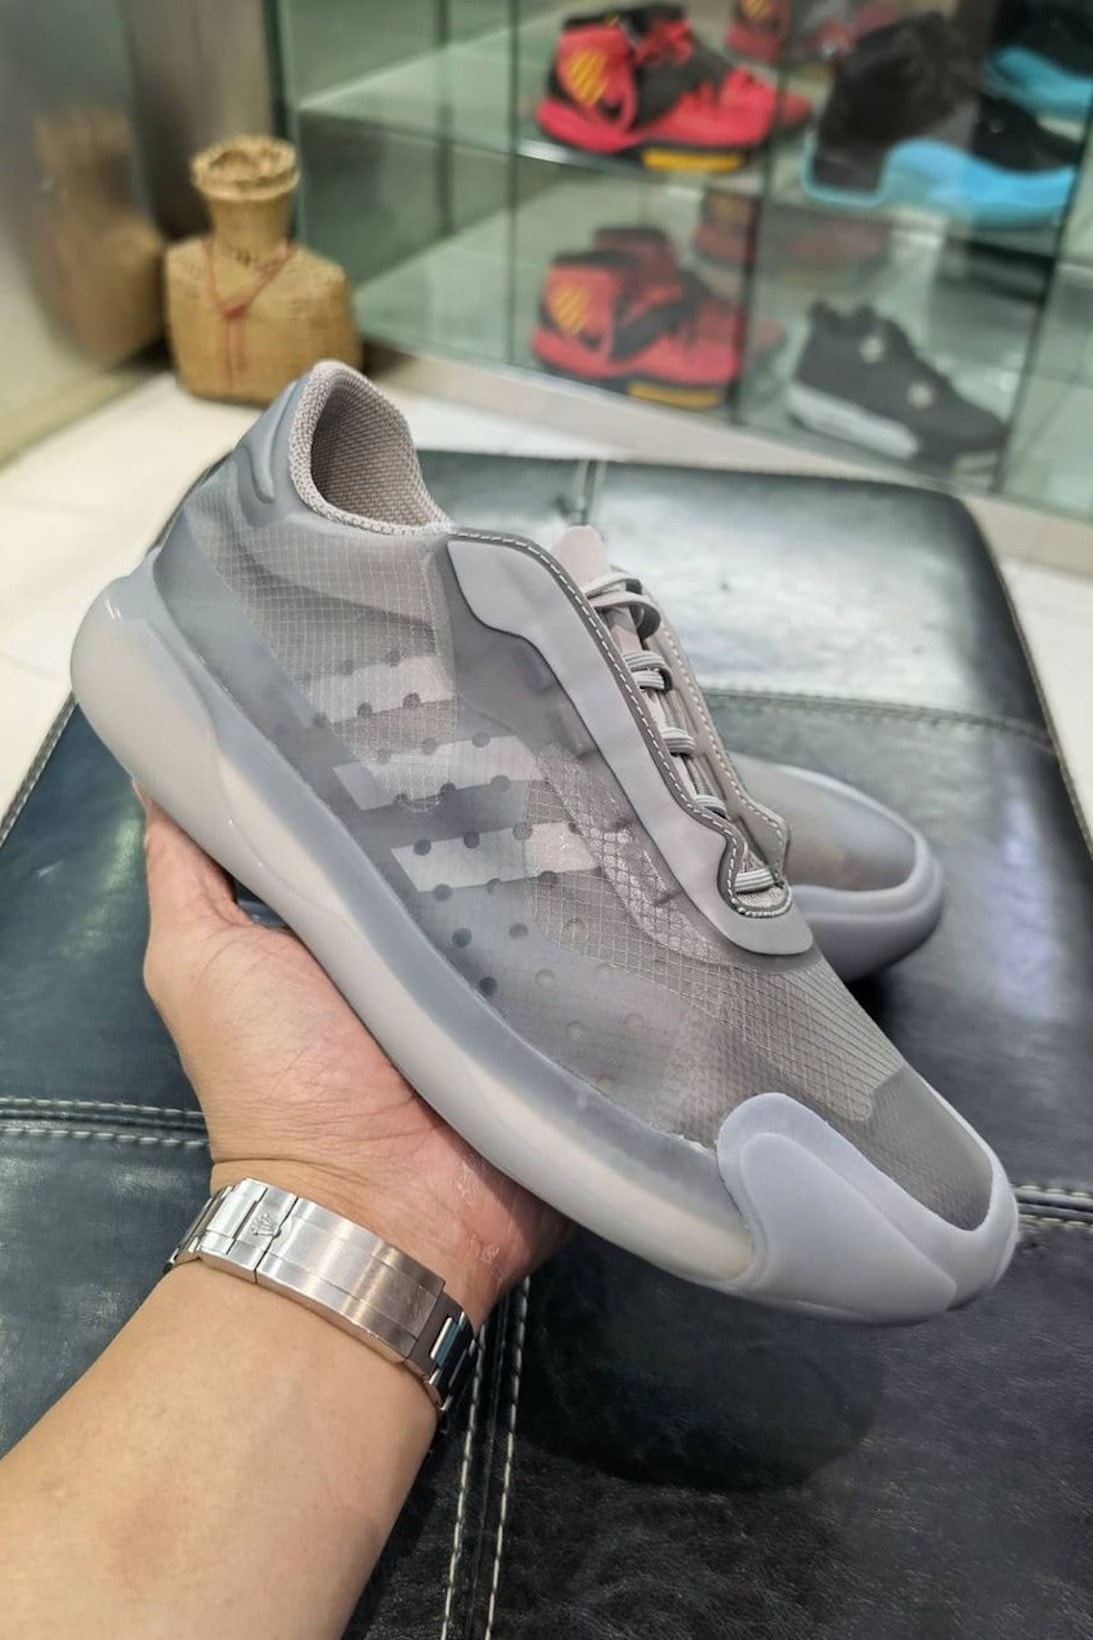 prada adidas ap luna rossa 21 sneaker collaboration gray colorway kicks shoes sneakerhead footwear